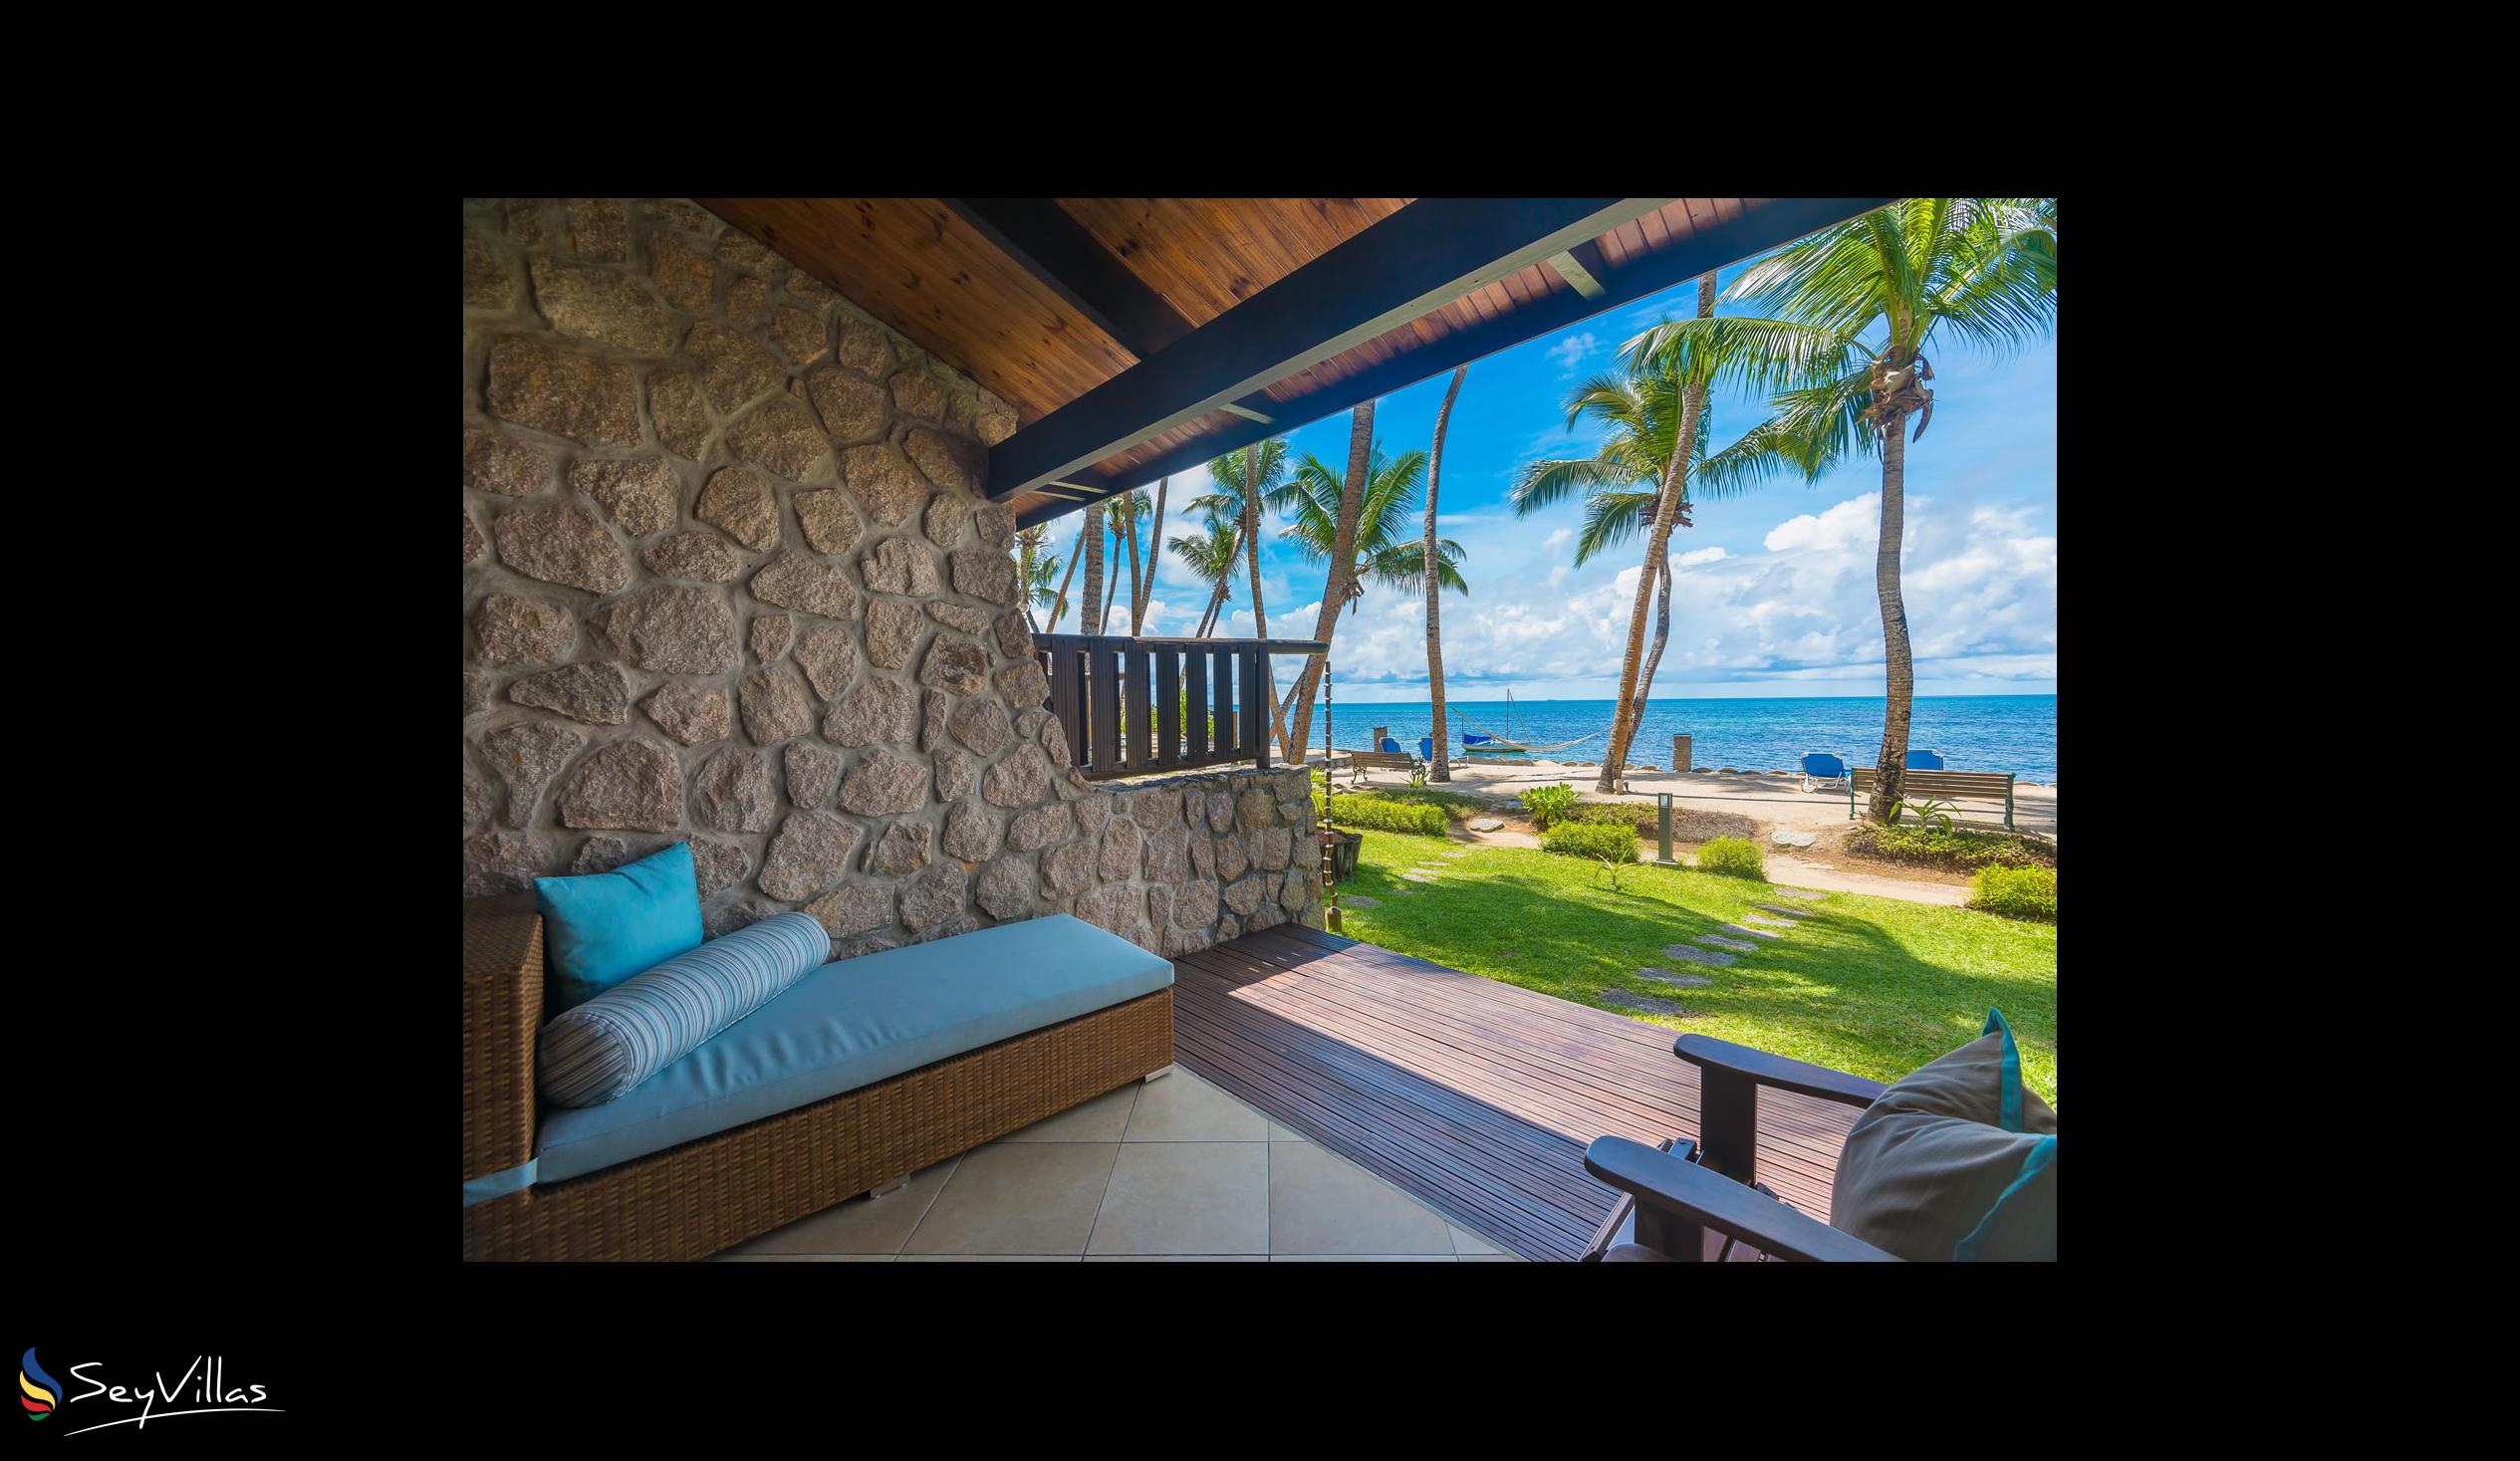 Foto 64: Coco de Mer & Black Parrot Suites - Superior - Praslin (Seychelles)